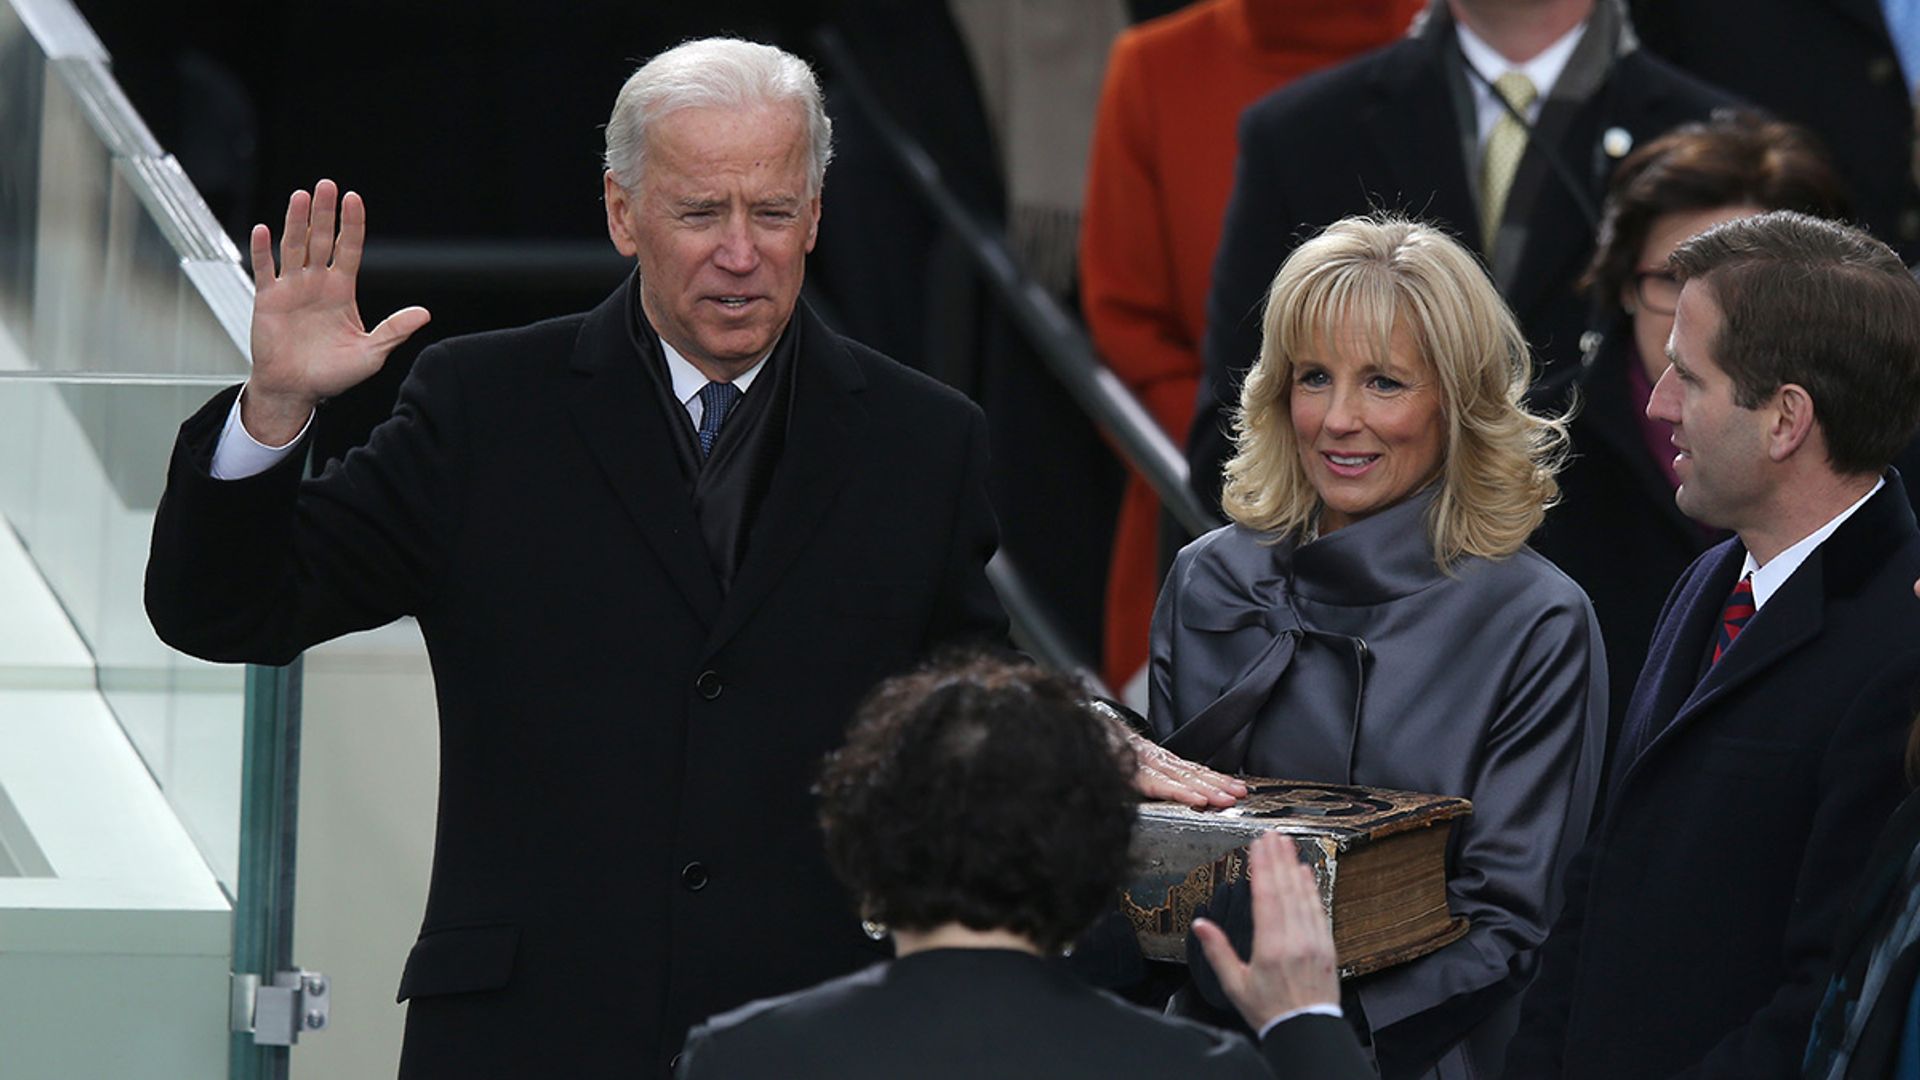 The poignant moment no-one saw at Joe Biden's inauguration